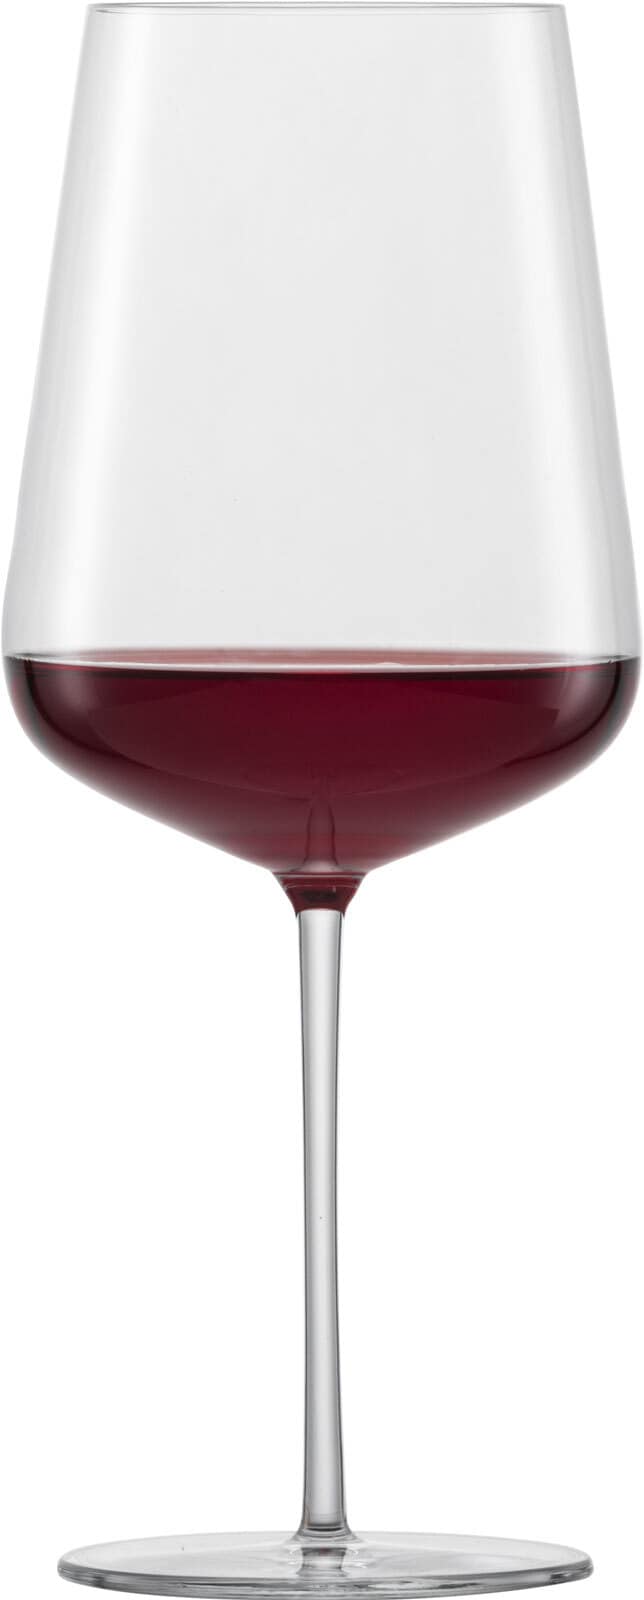 ZWIESEL GLAS Bordeauxglas VERVINO 2er Set - je 742 ml